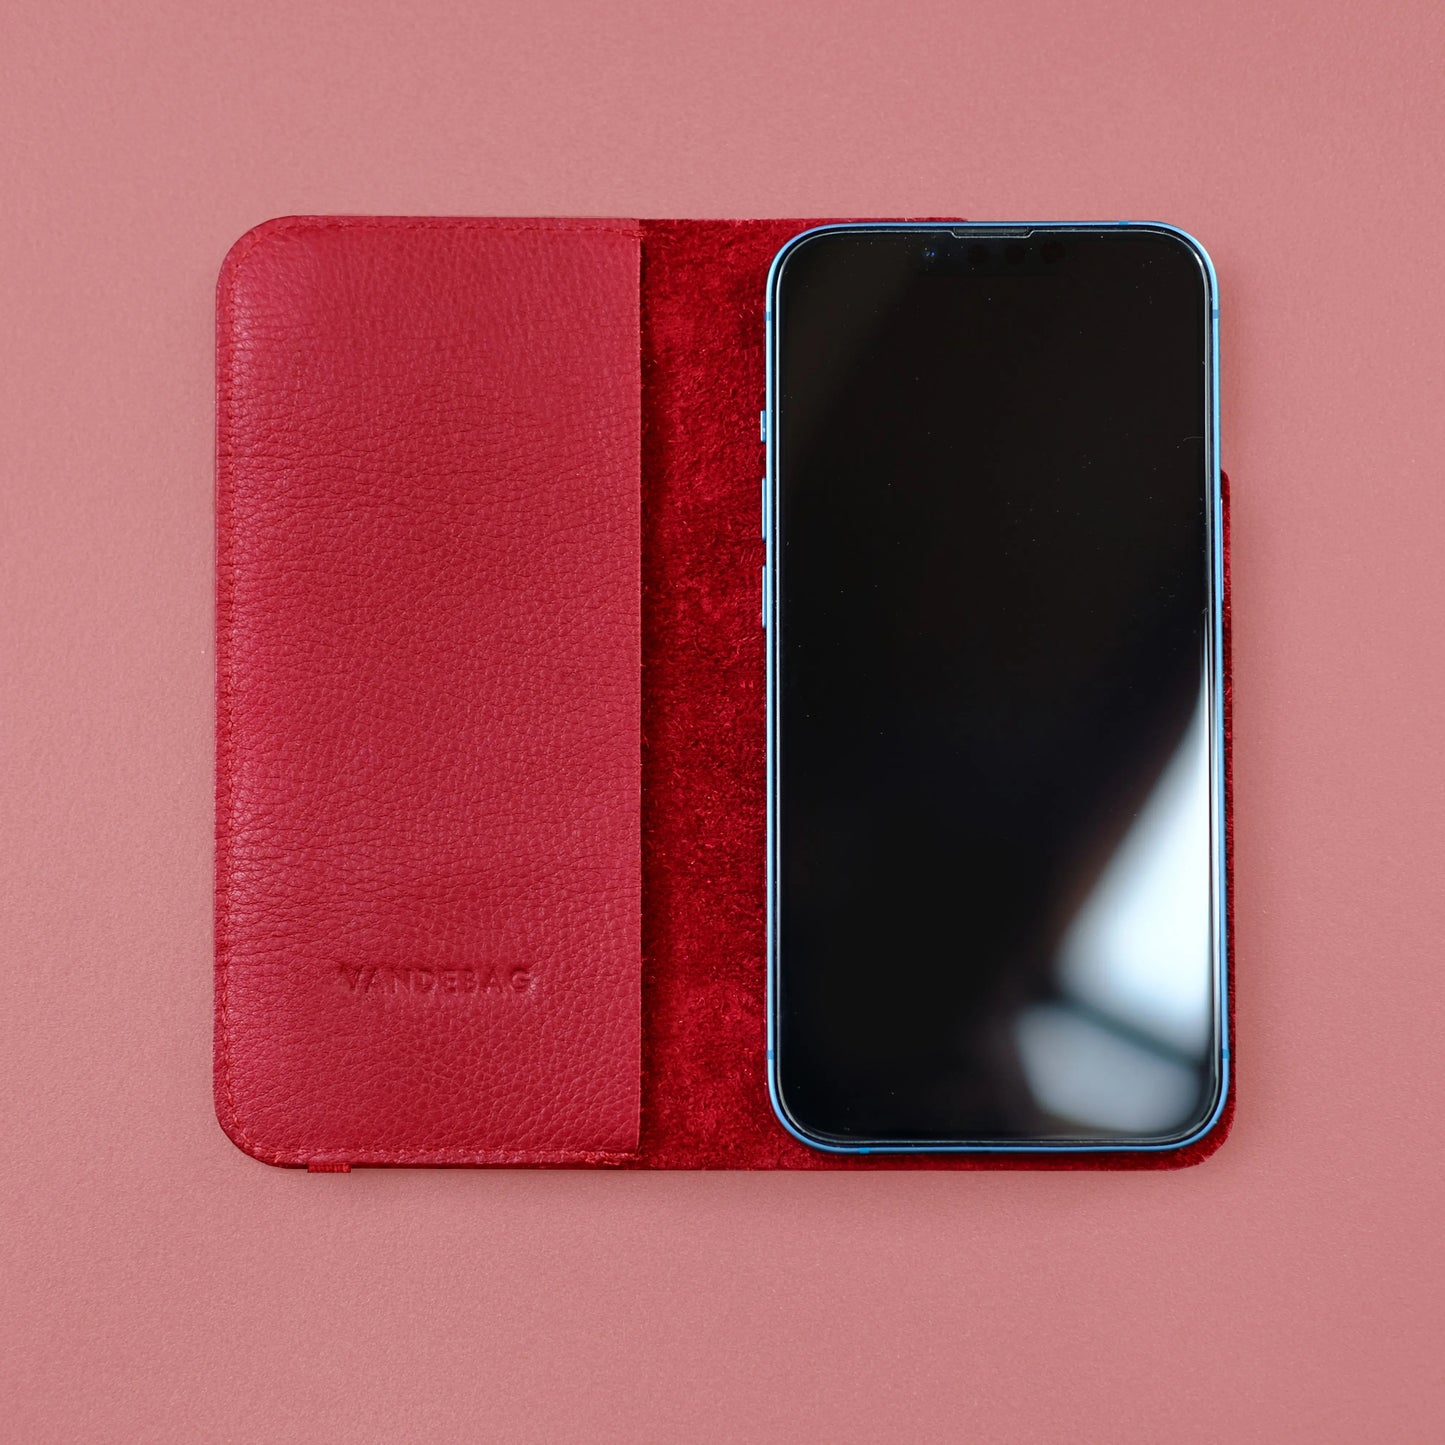 Kalppcover für iPhones aus rotem Leder mit Vandebag-Prägung